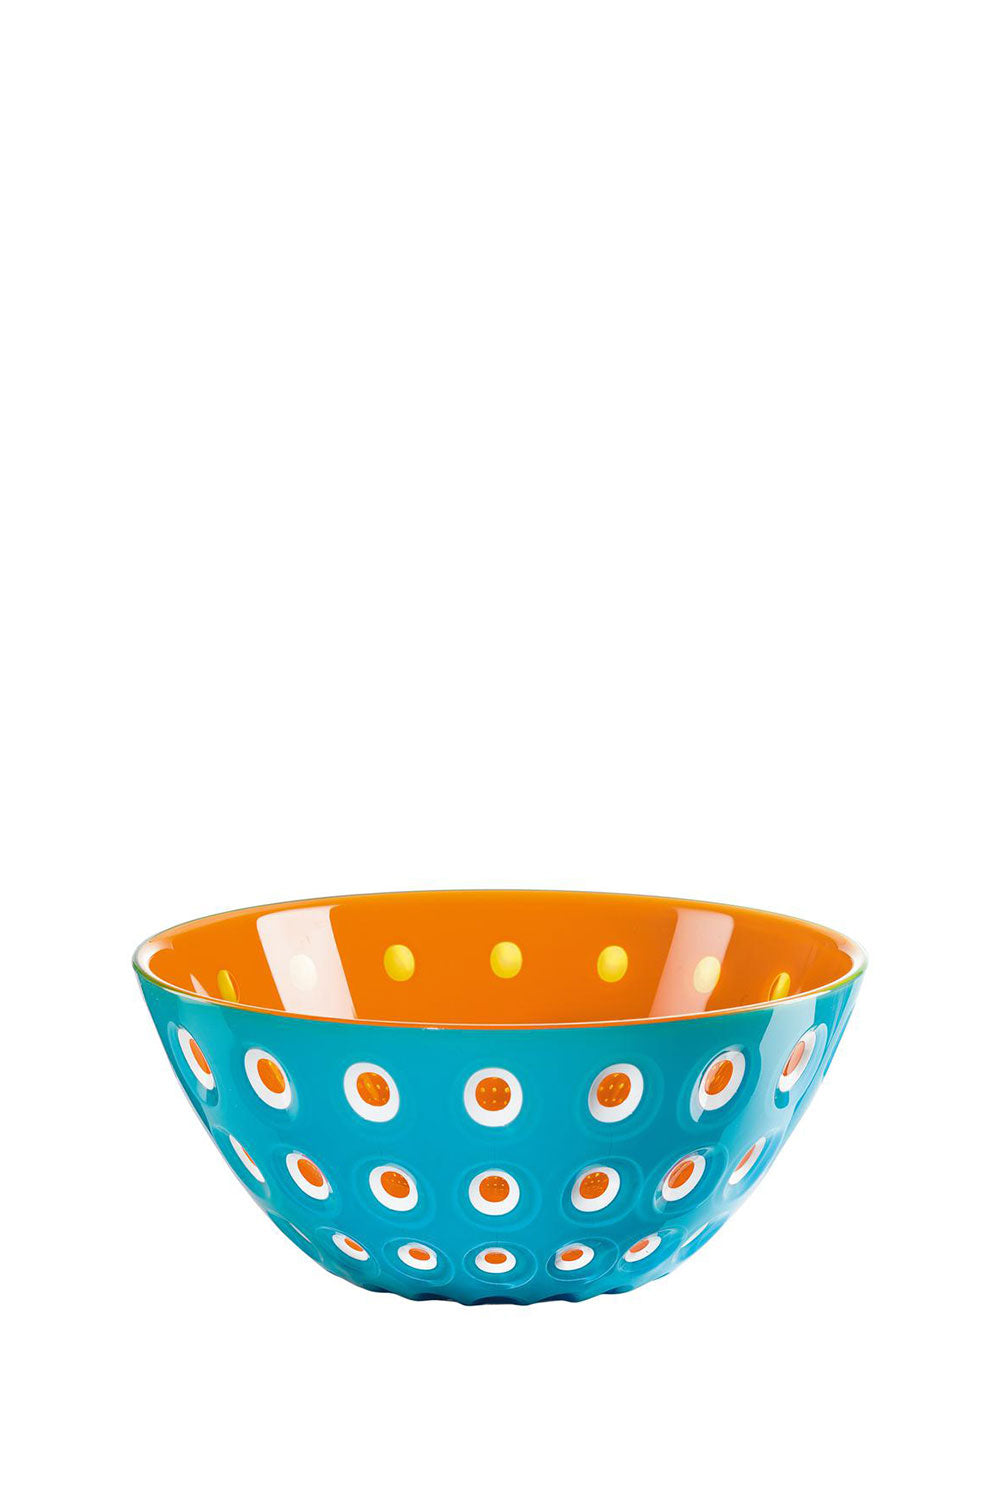 Murrine Blue & Orange Bowl, 20 cm